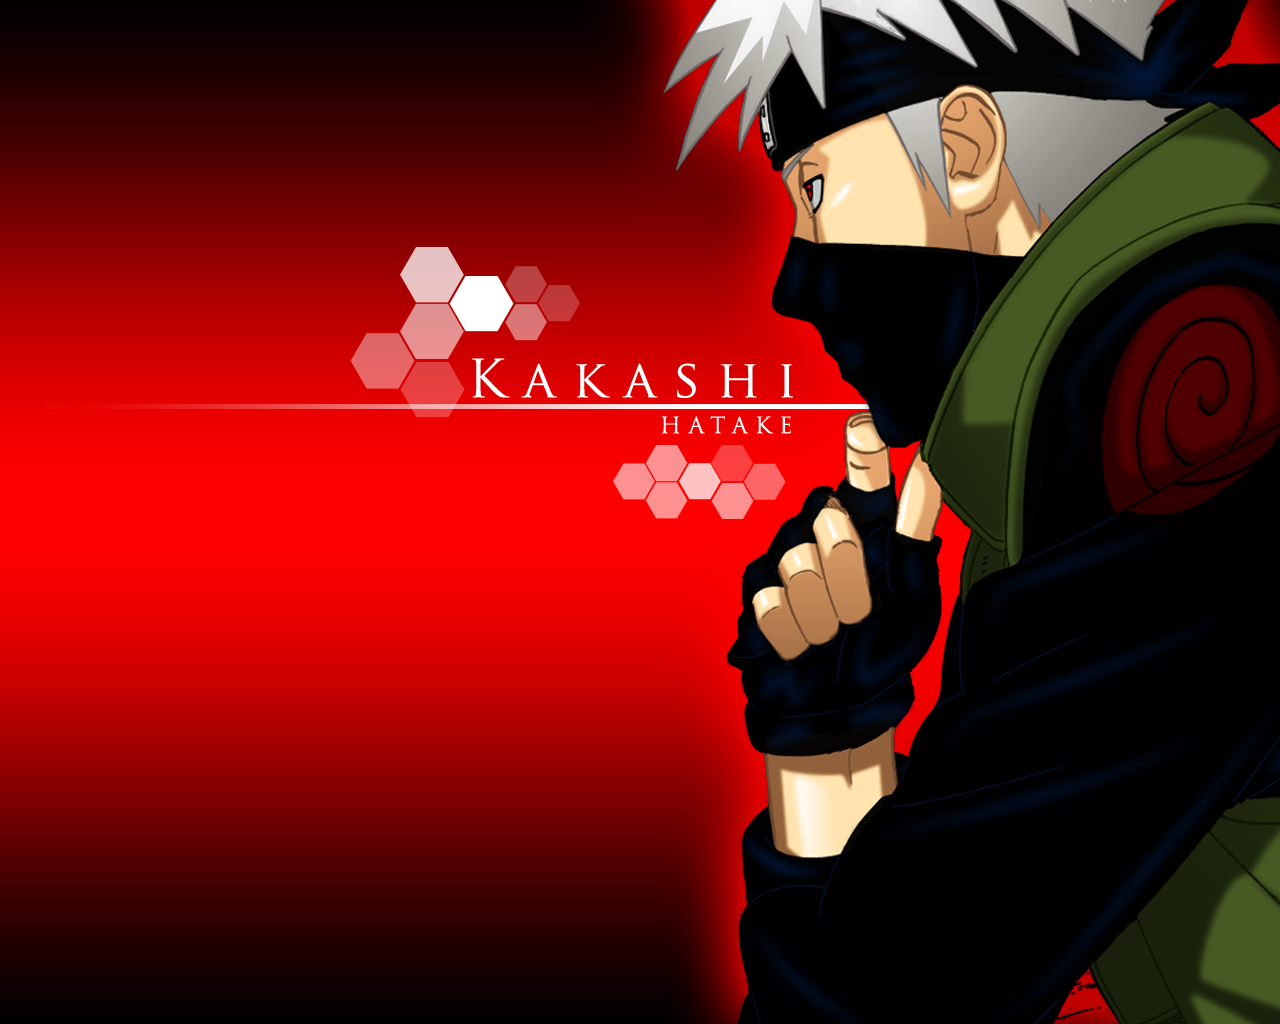 Kakashi wallpaper (Naruto) - 1080p x 2244p by Bokssy on DeviantArt